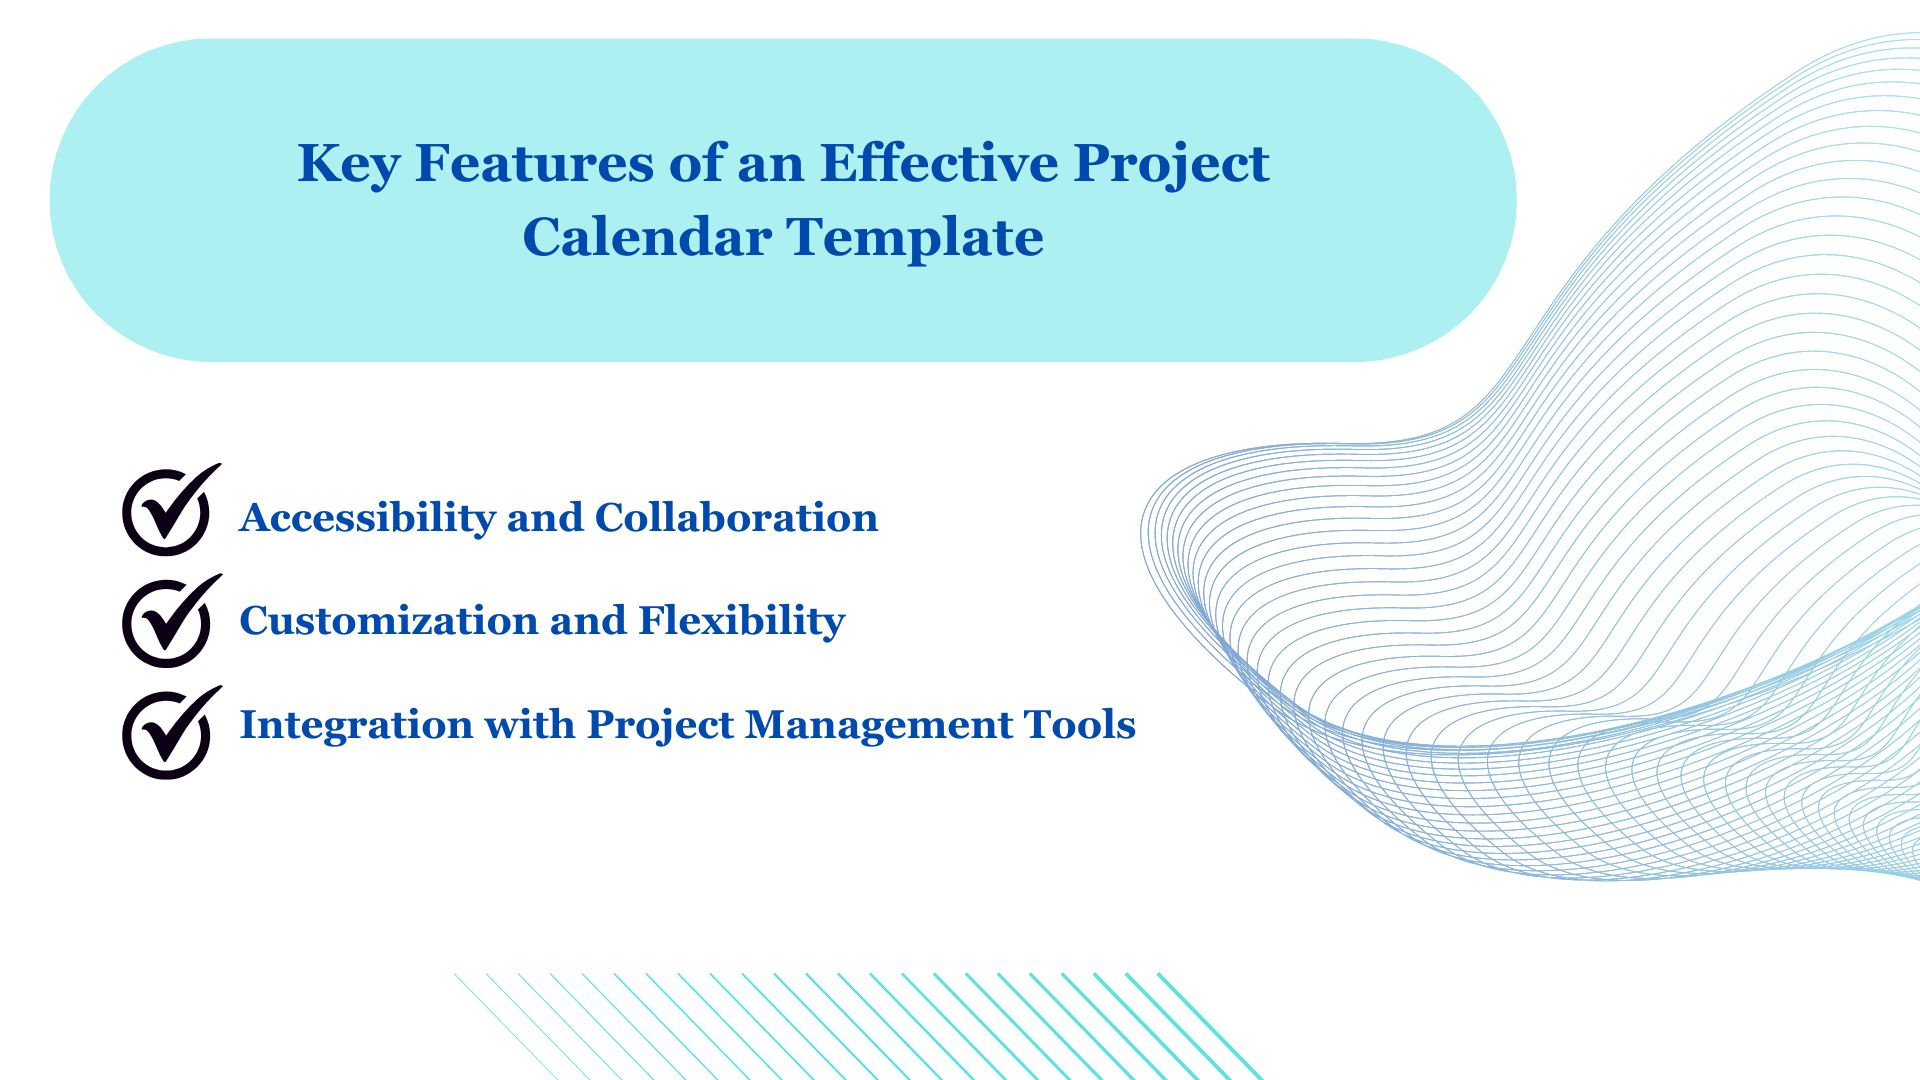 Key Features of an Effective Project Calendar Template